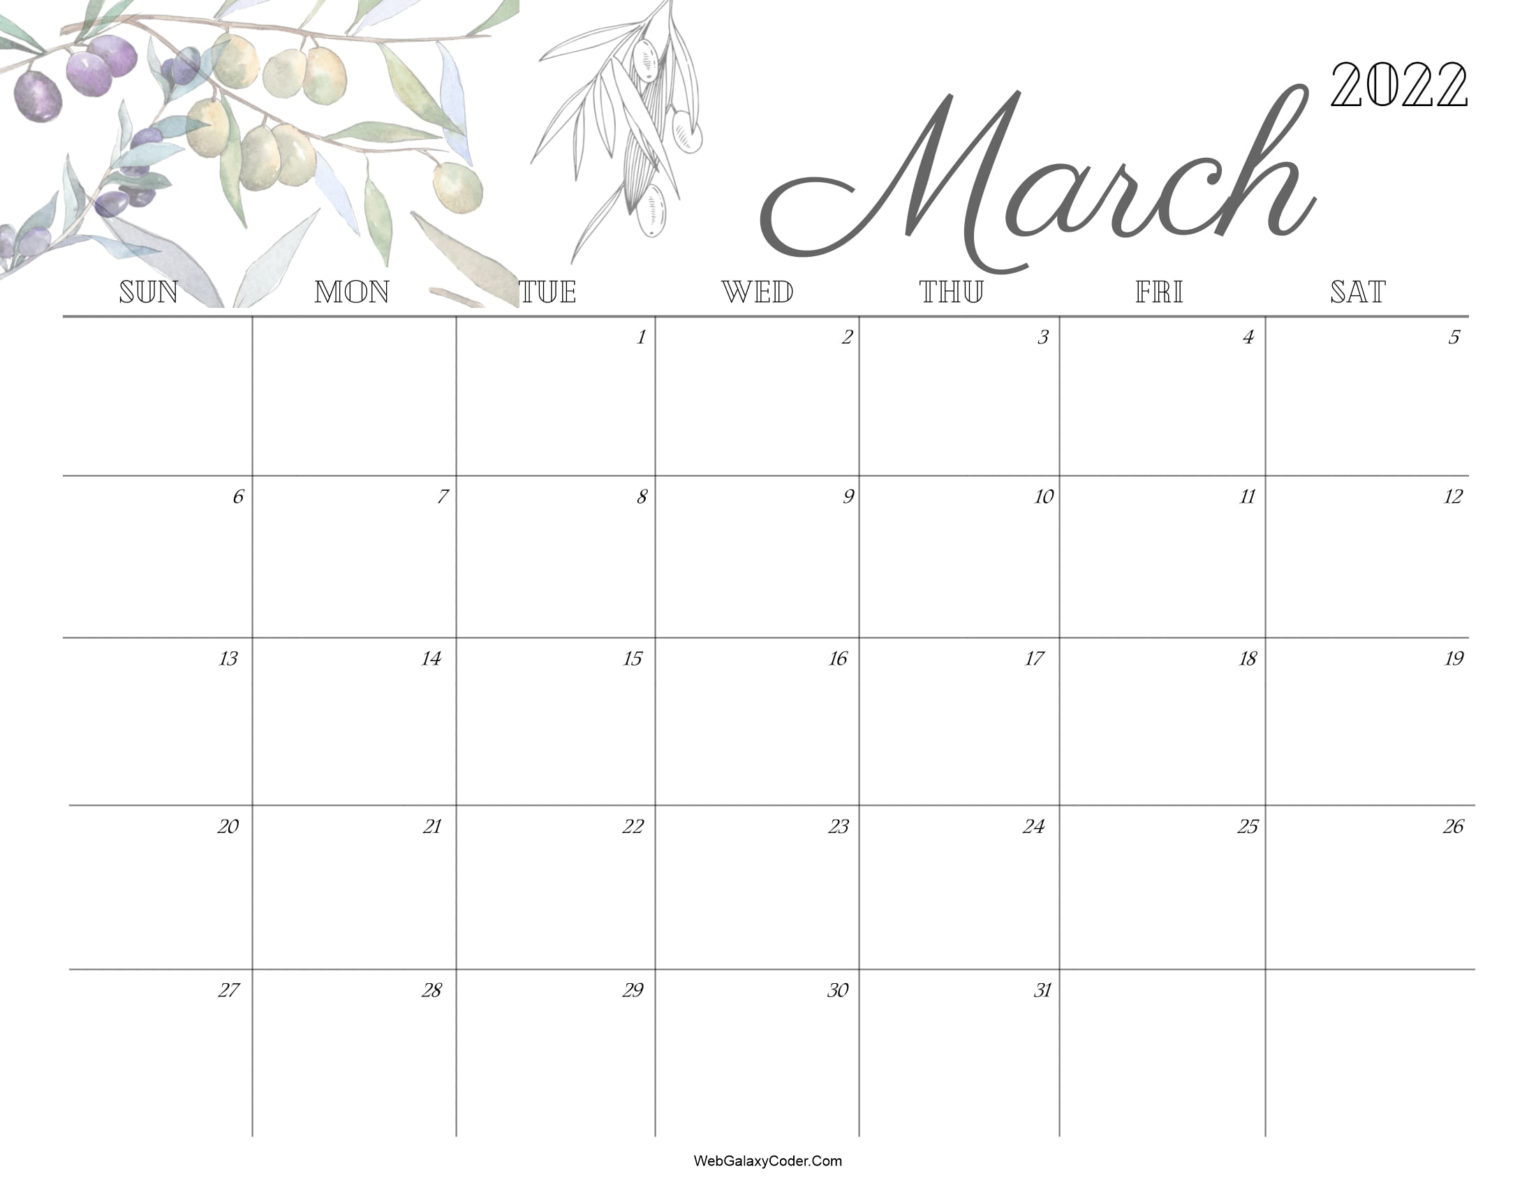 March 2022 Calendar - Cute Format - Print Now